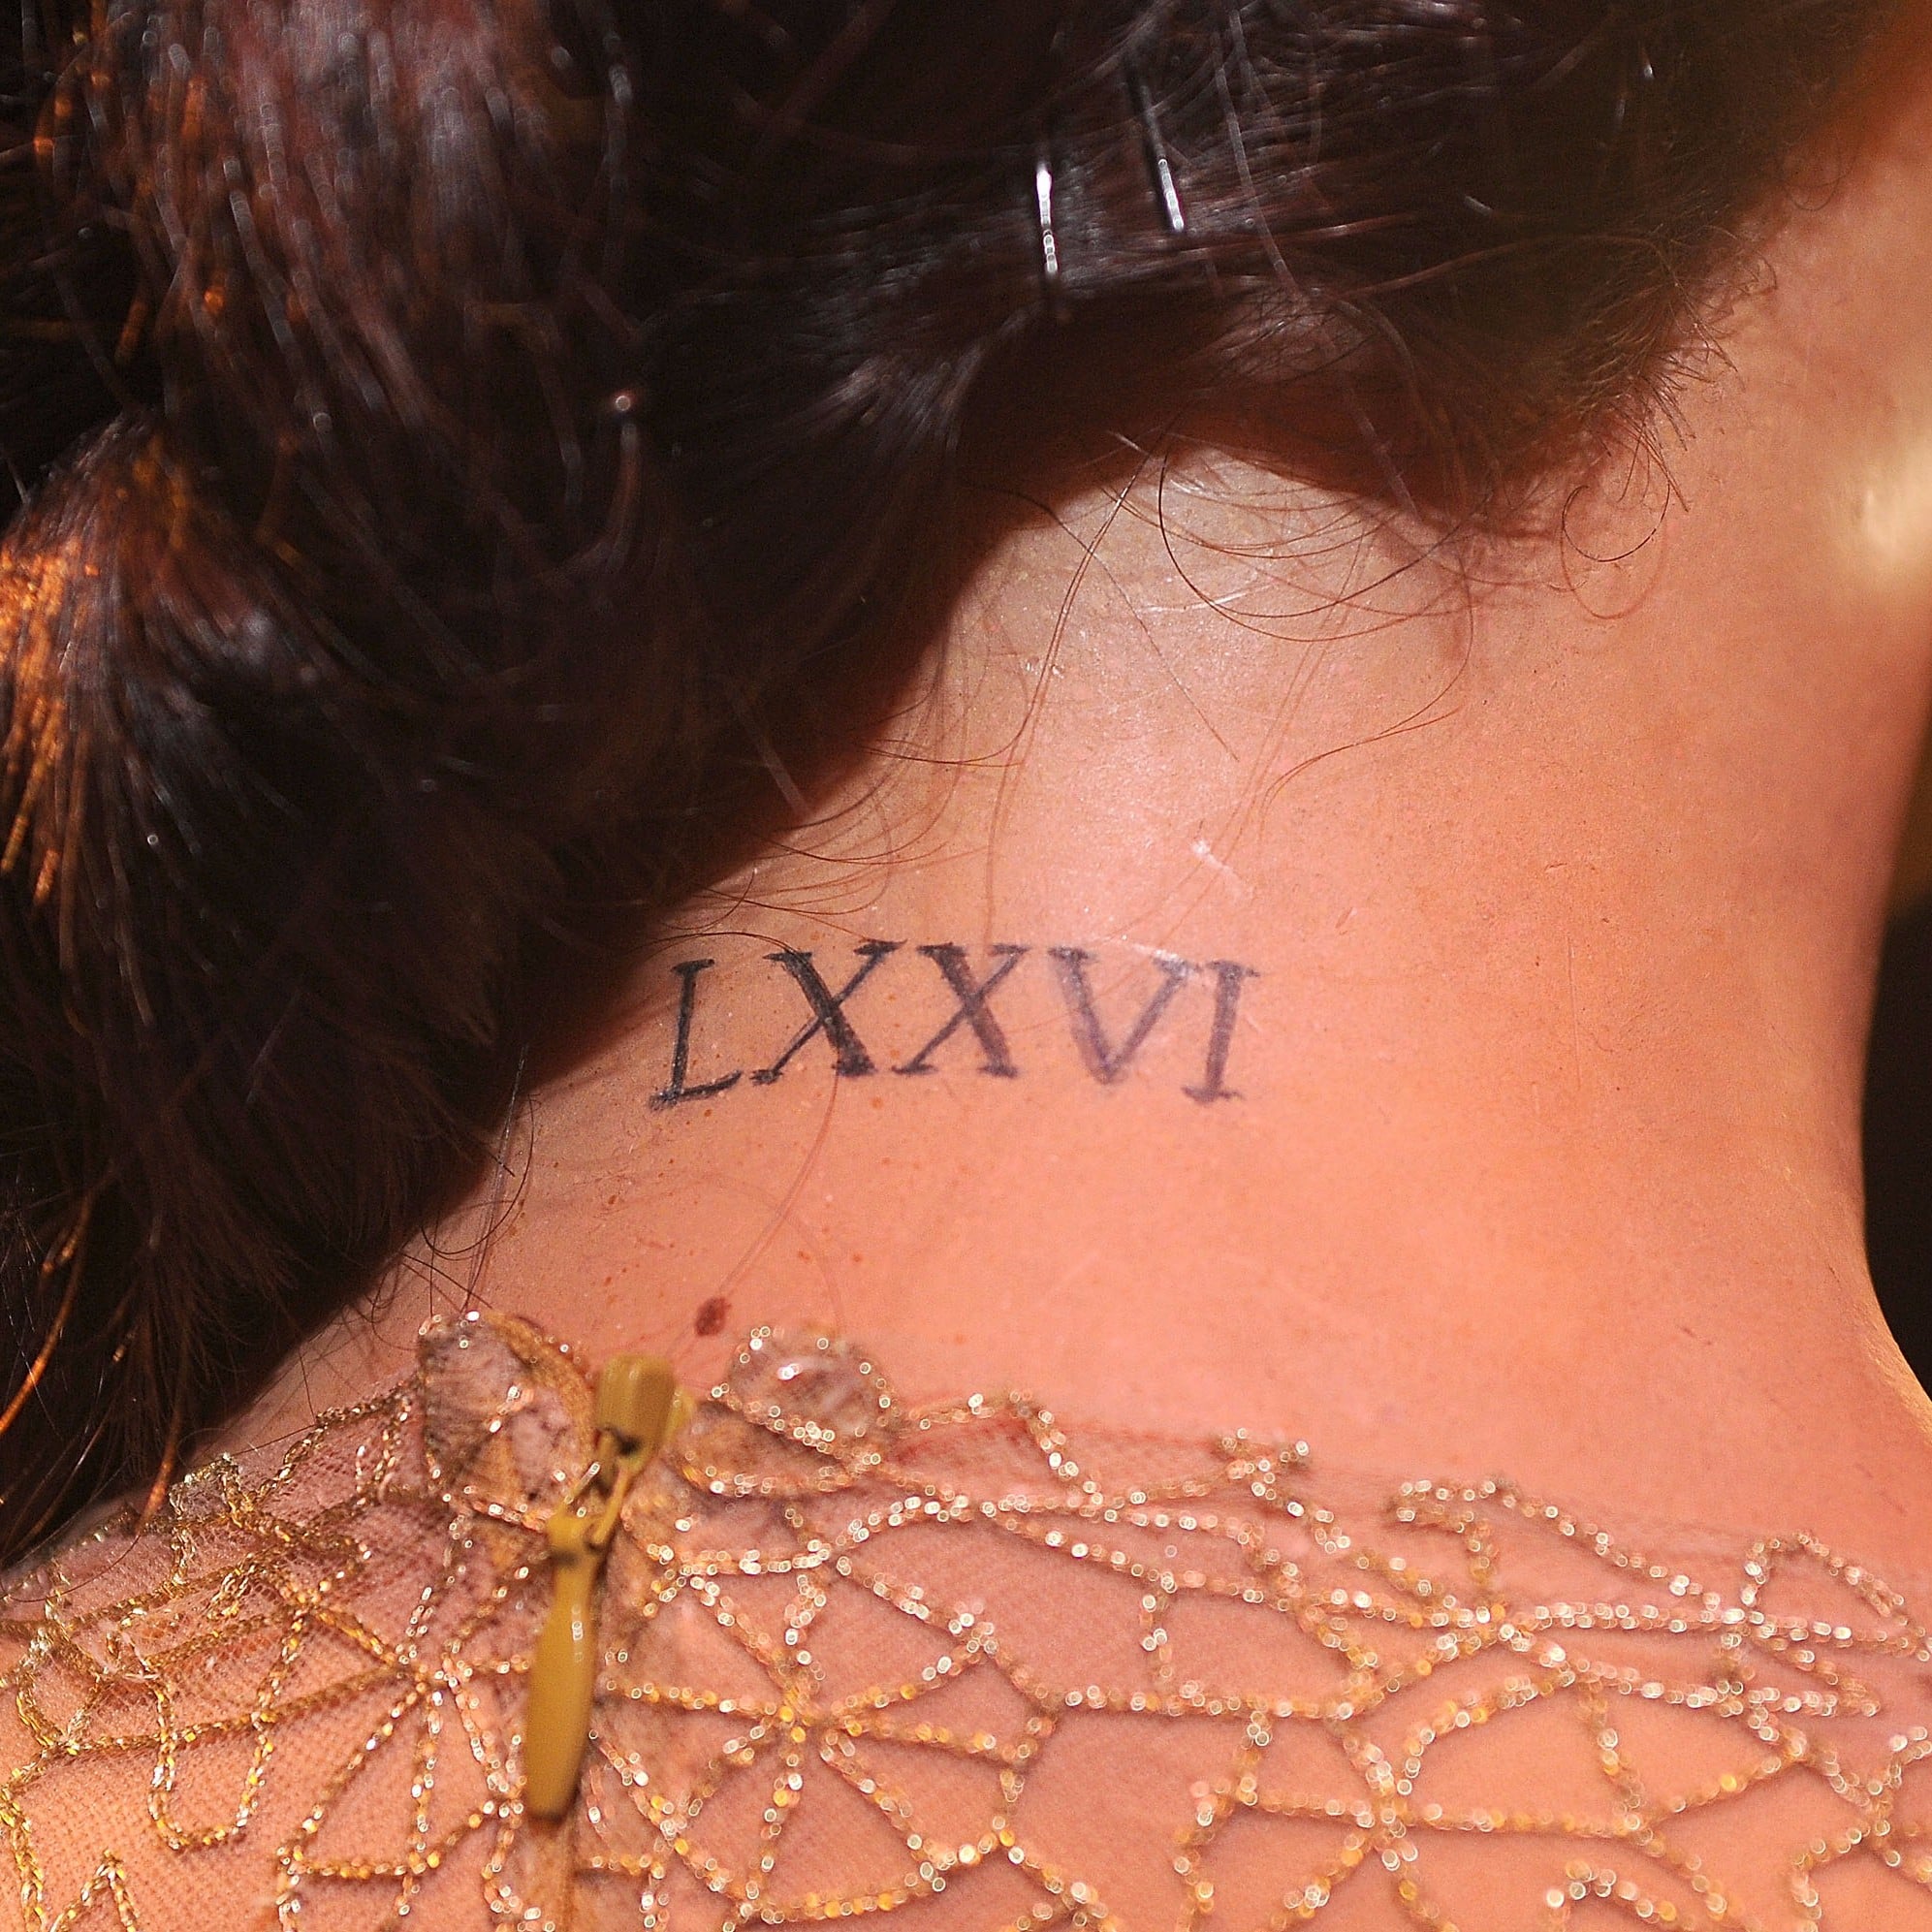 Tattooed Latina